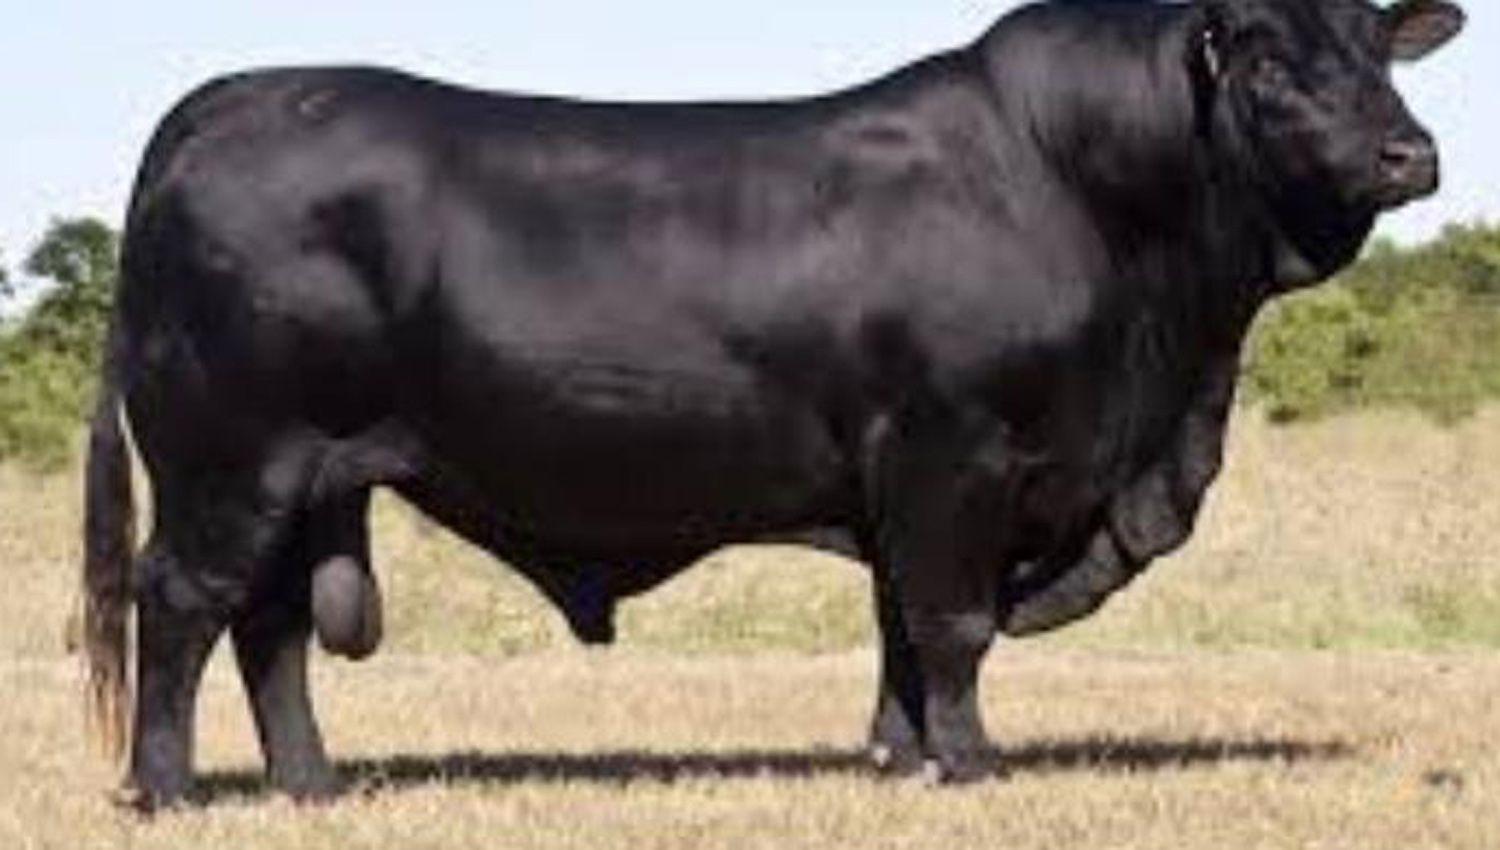 Roban en Campo Gallo un gran toro Brangus reproductor valuado en casi un milloacuten de pesos